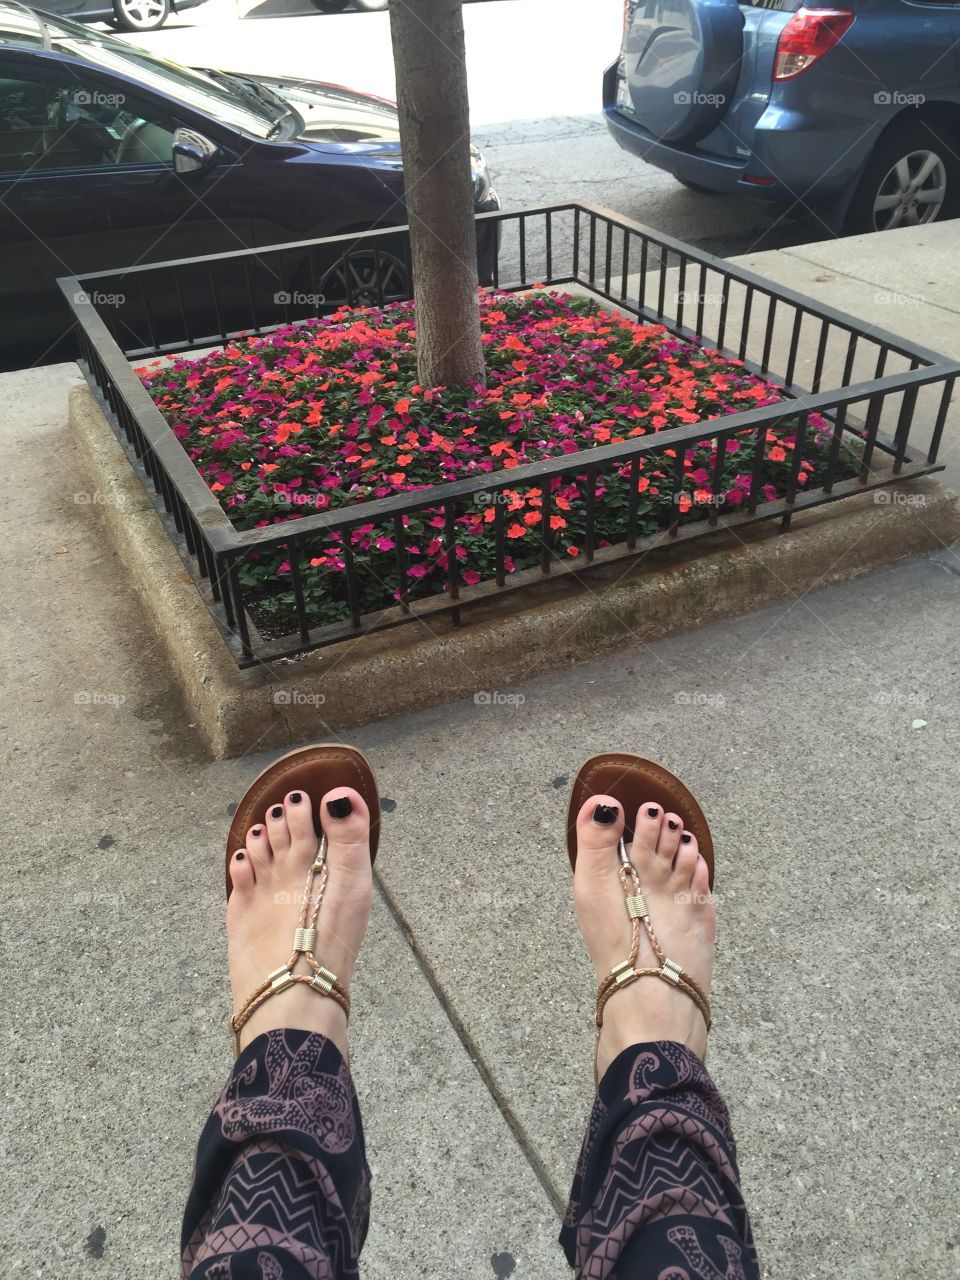 Flowers by my feet